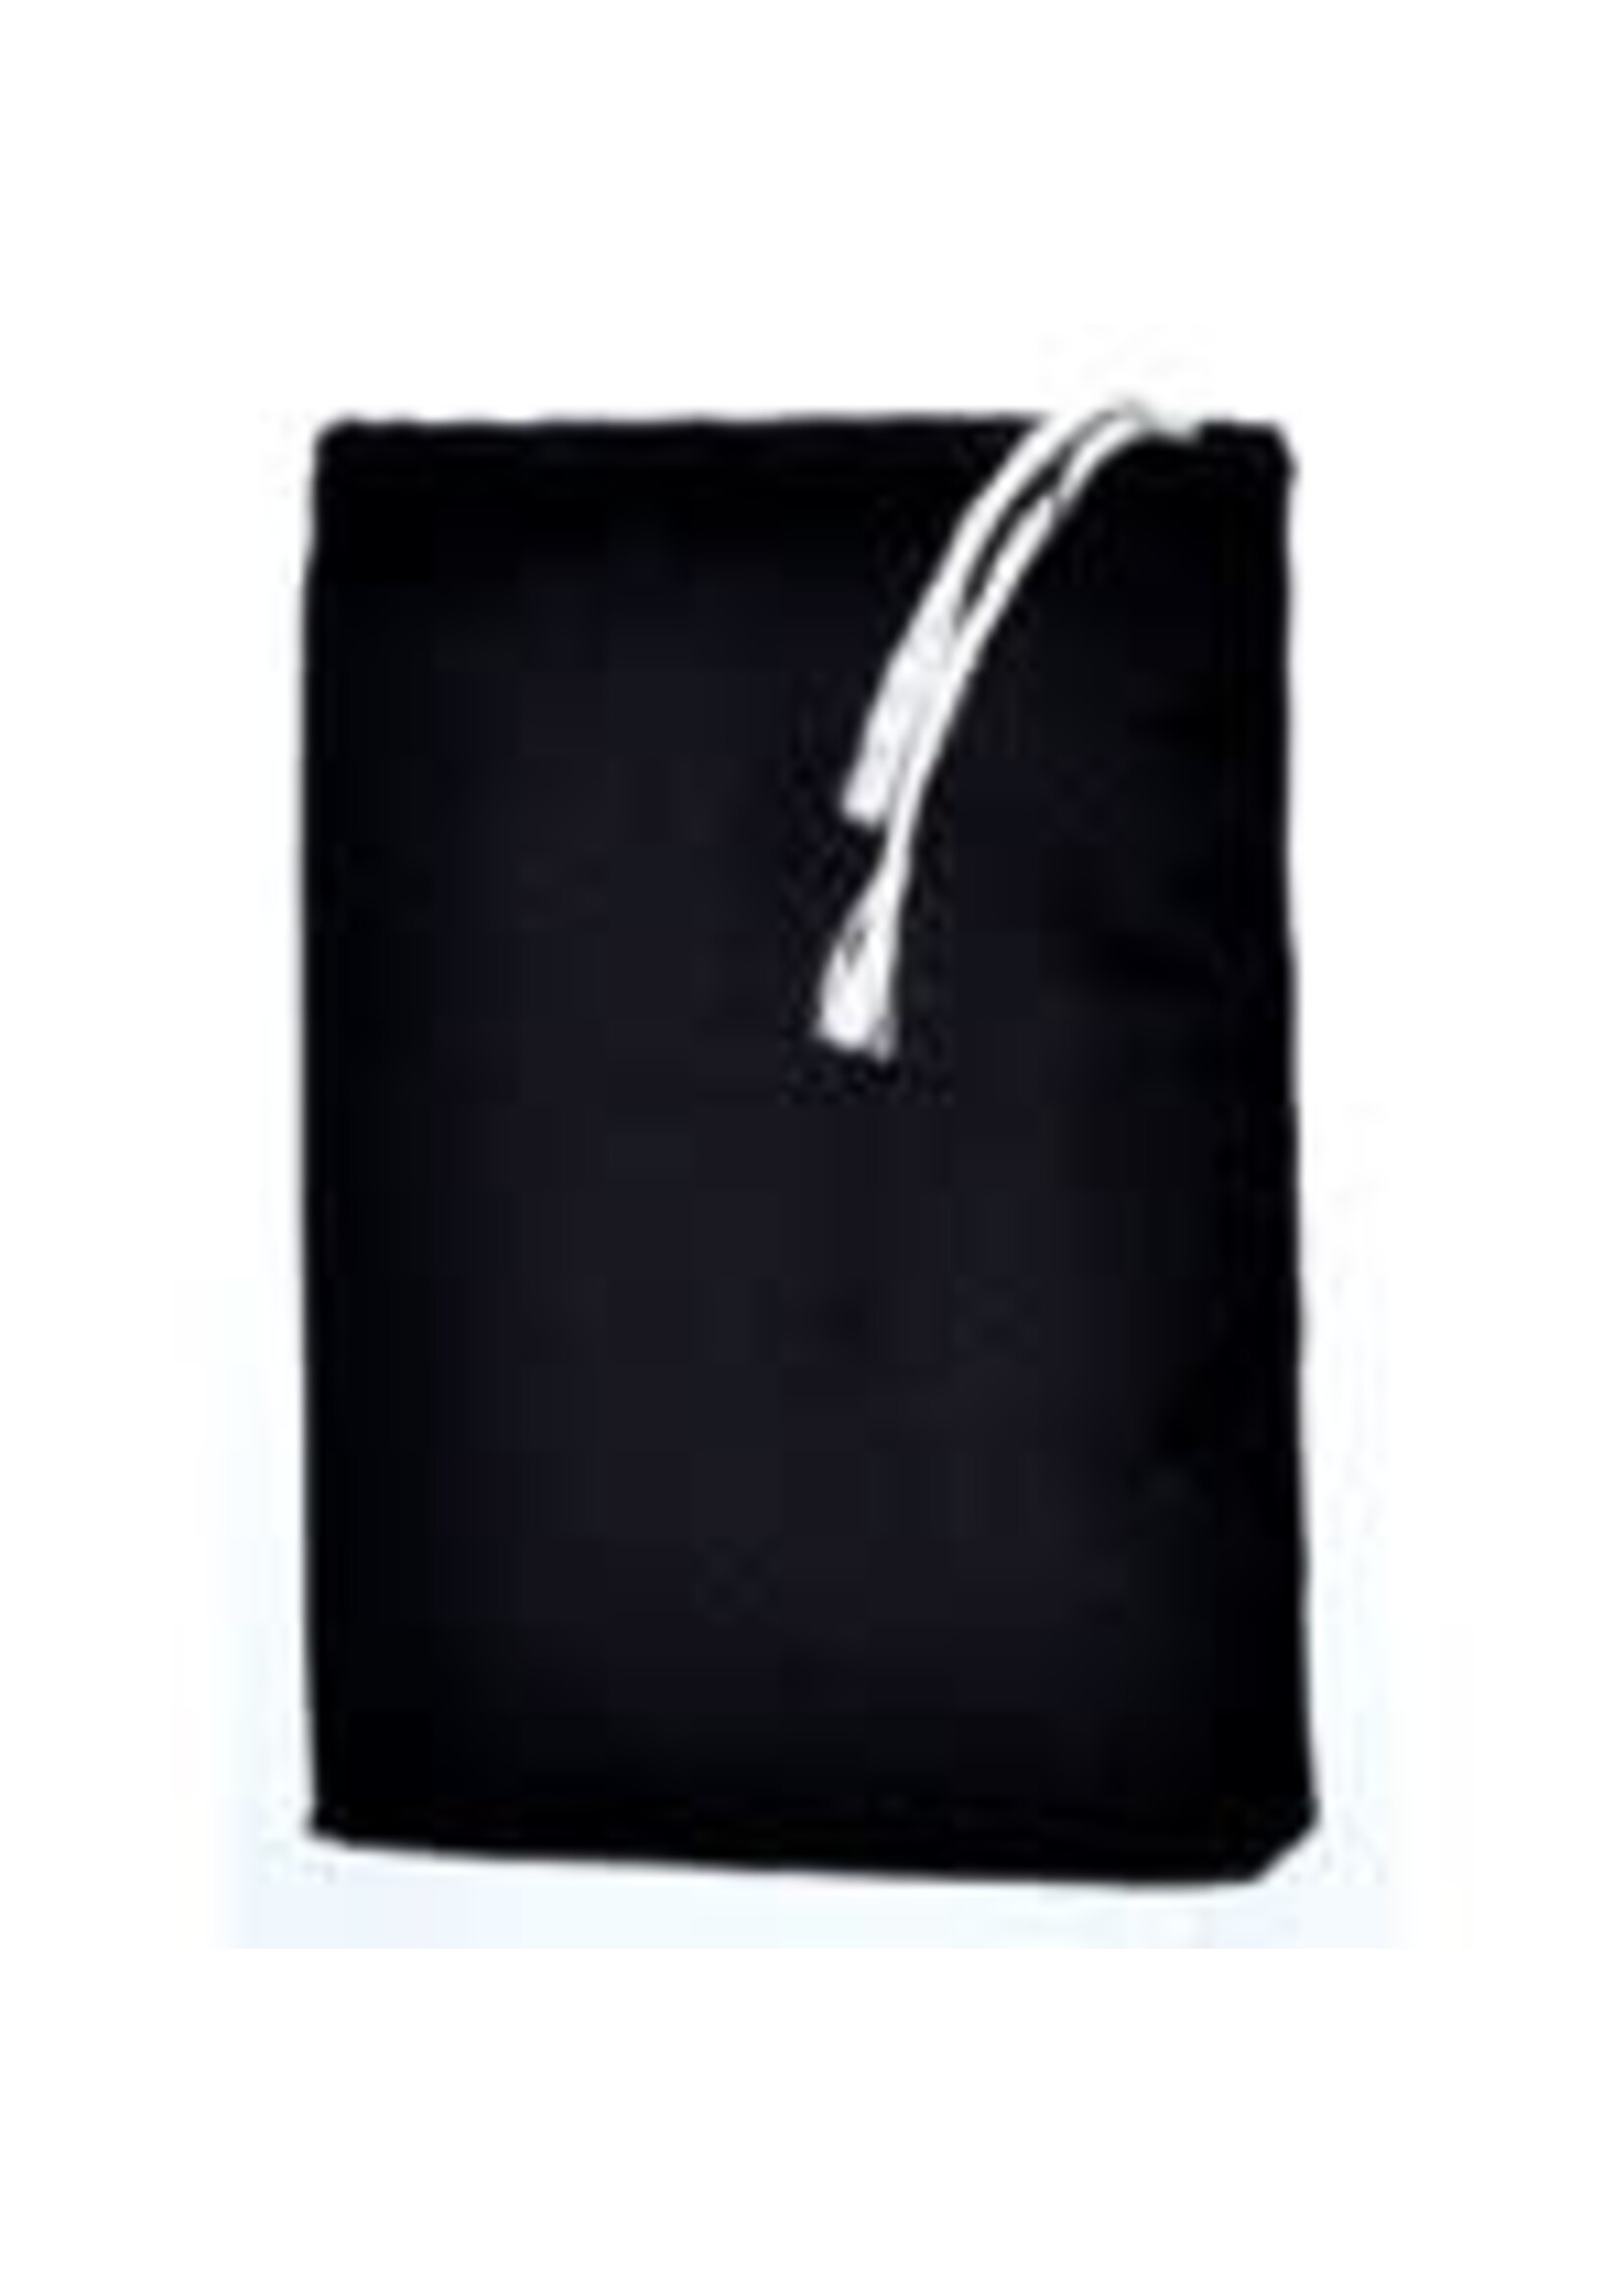 Black Cotton Bag 3" x 4"